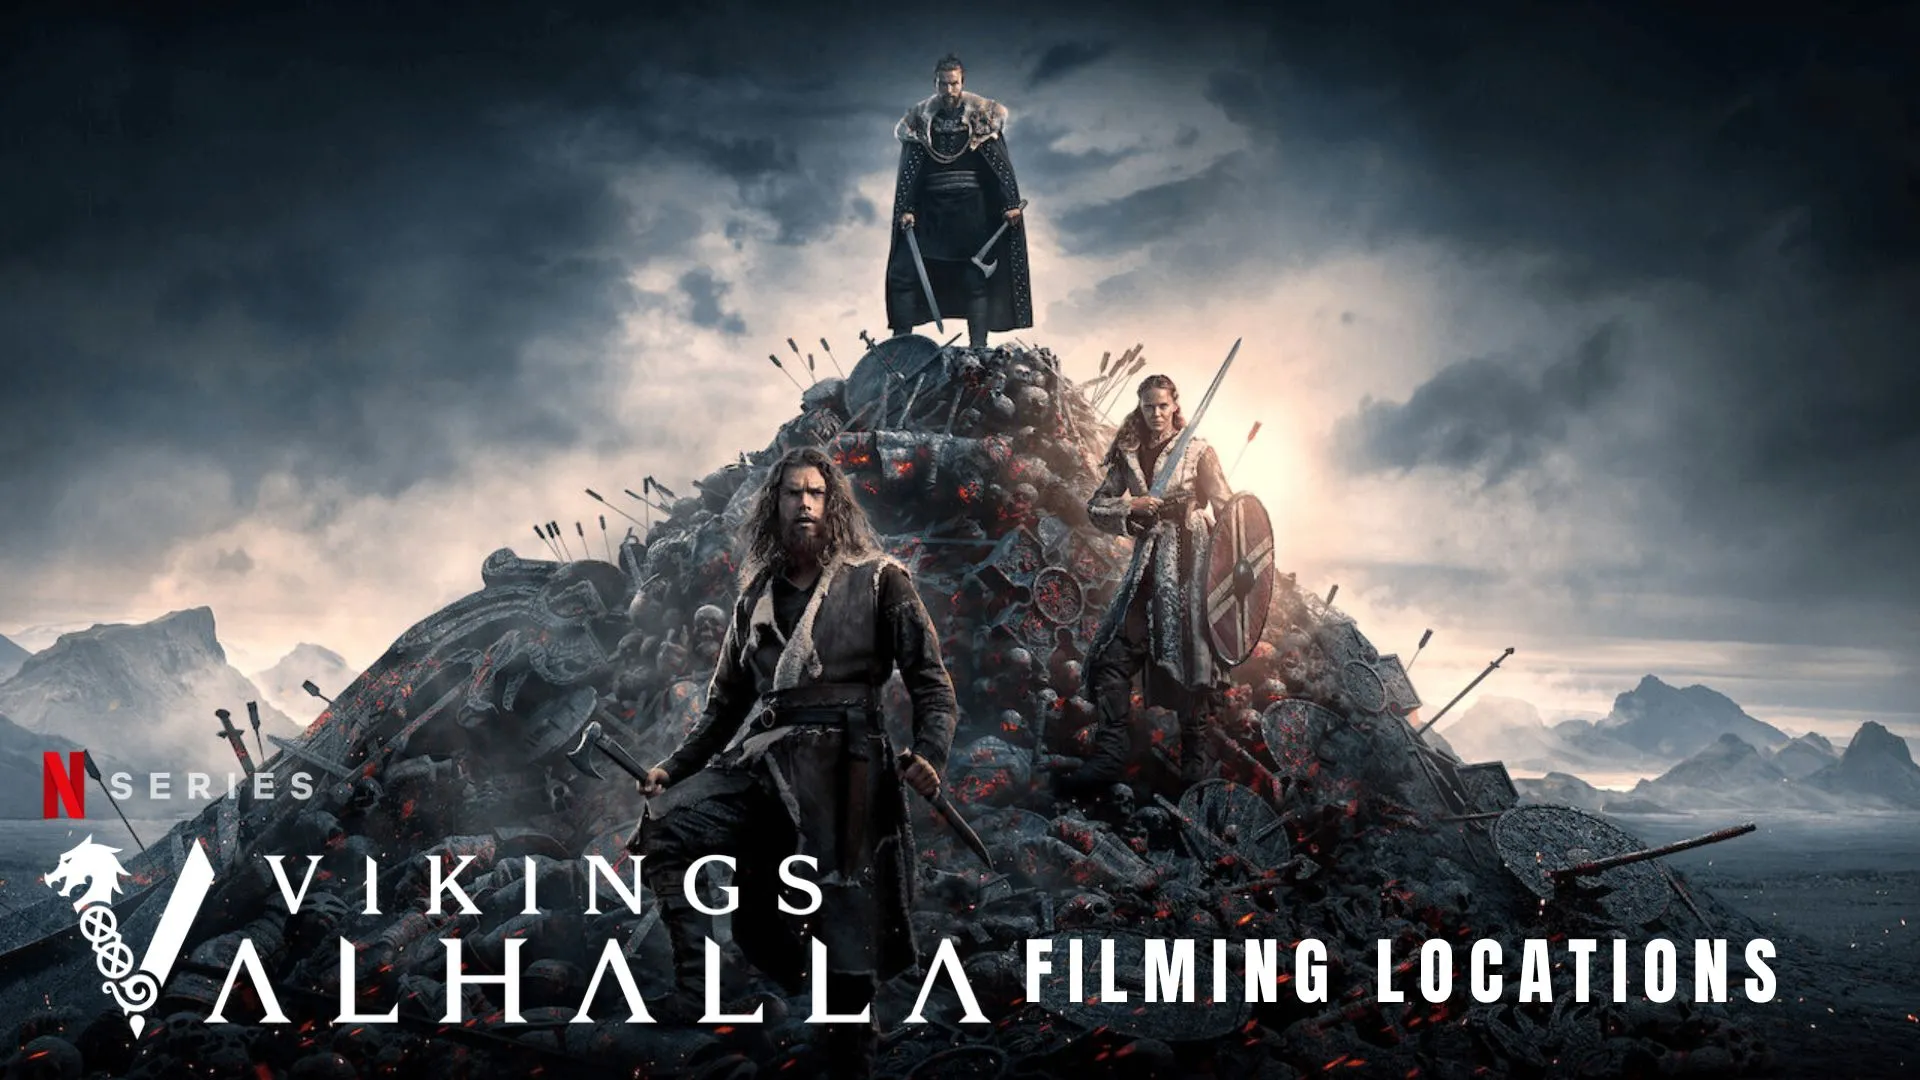 Vikings: Valhalla Filming LocationsVikings: Valhalla Filming Locations